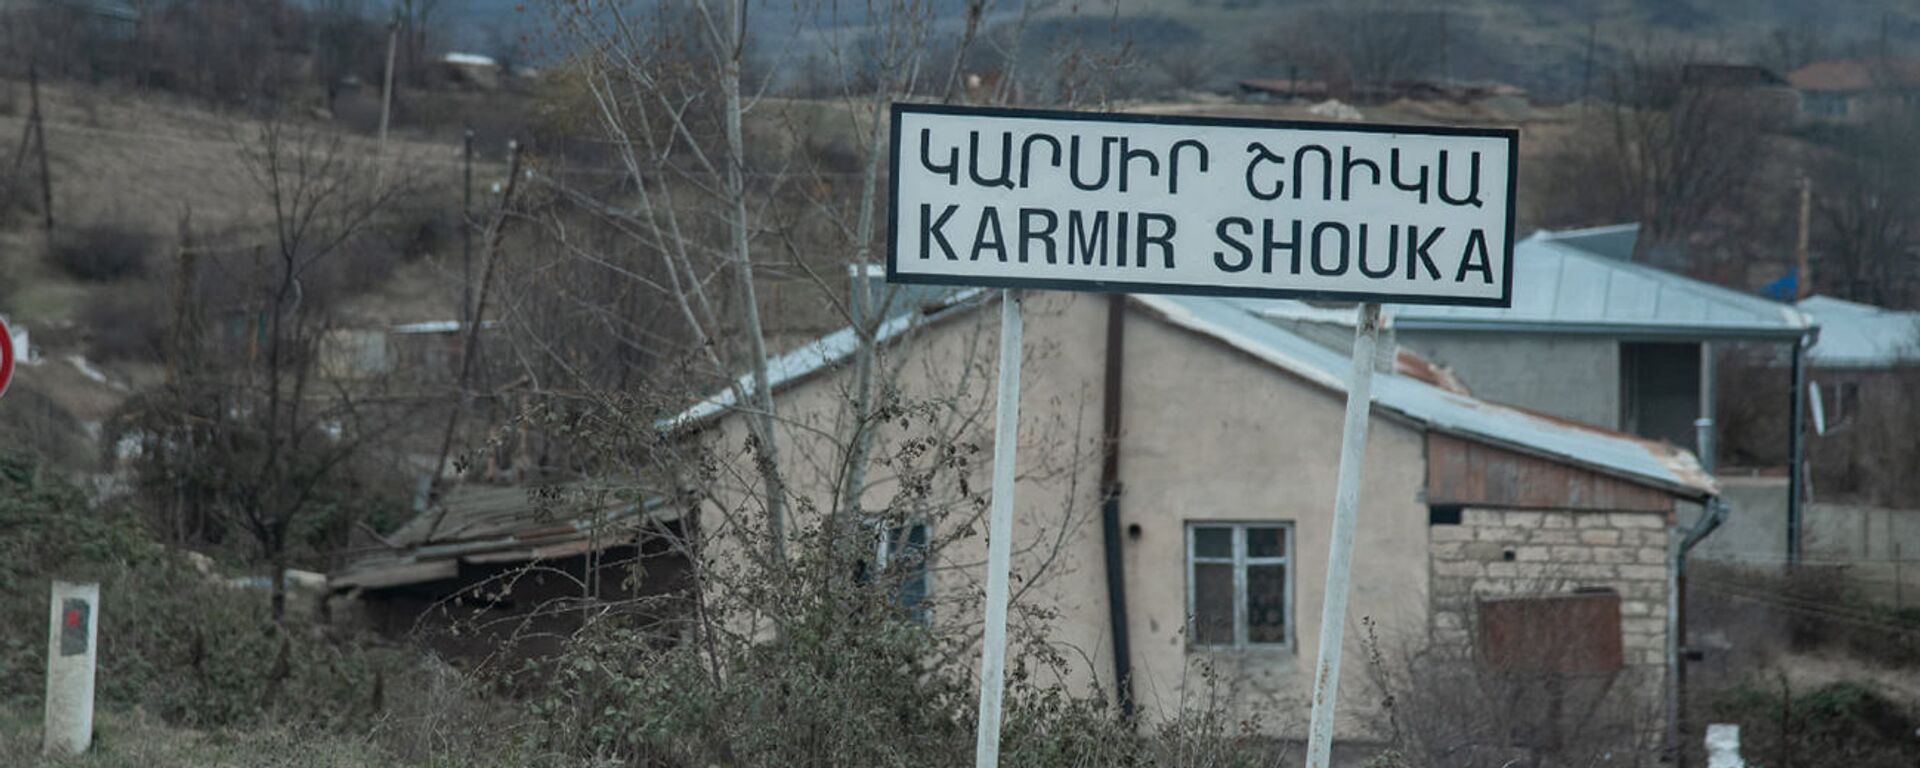 Село Кармир Шука в Карабахе - Sputnik Армения, 1920, 04.05.2021